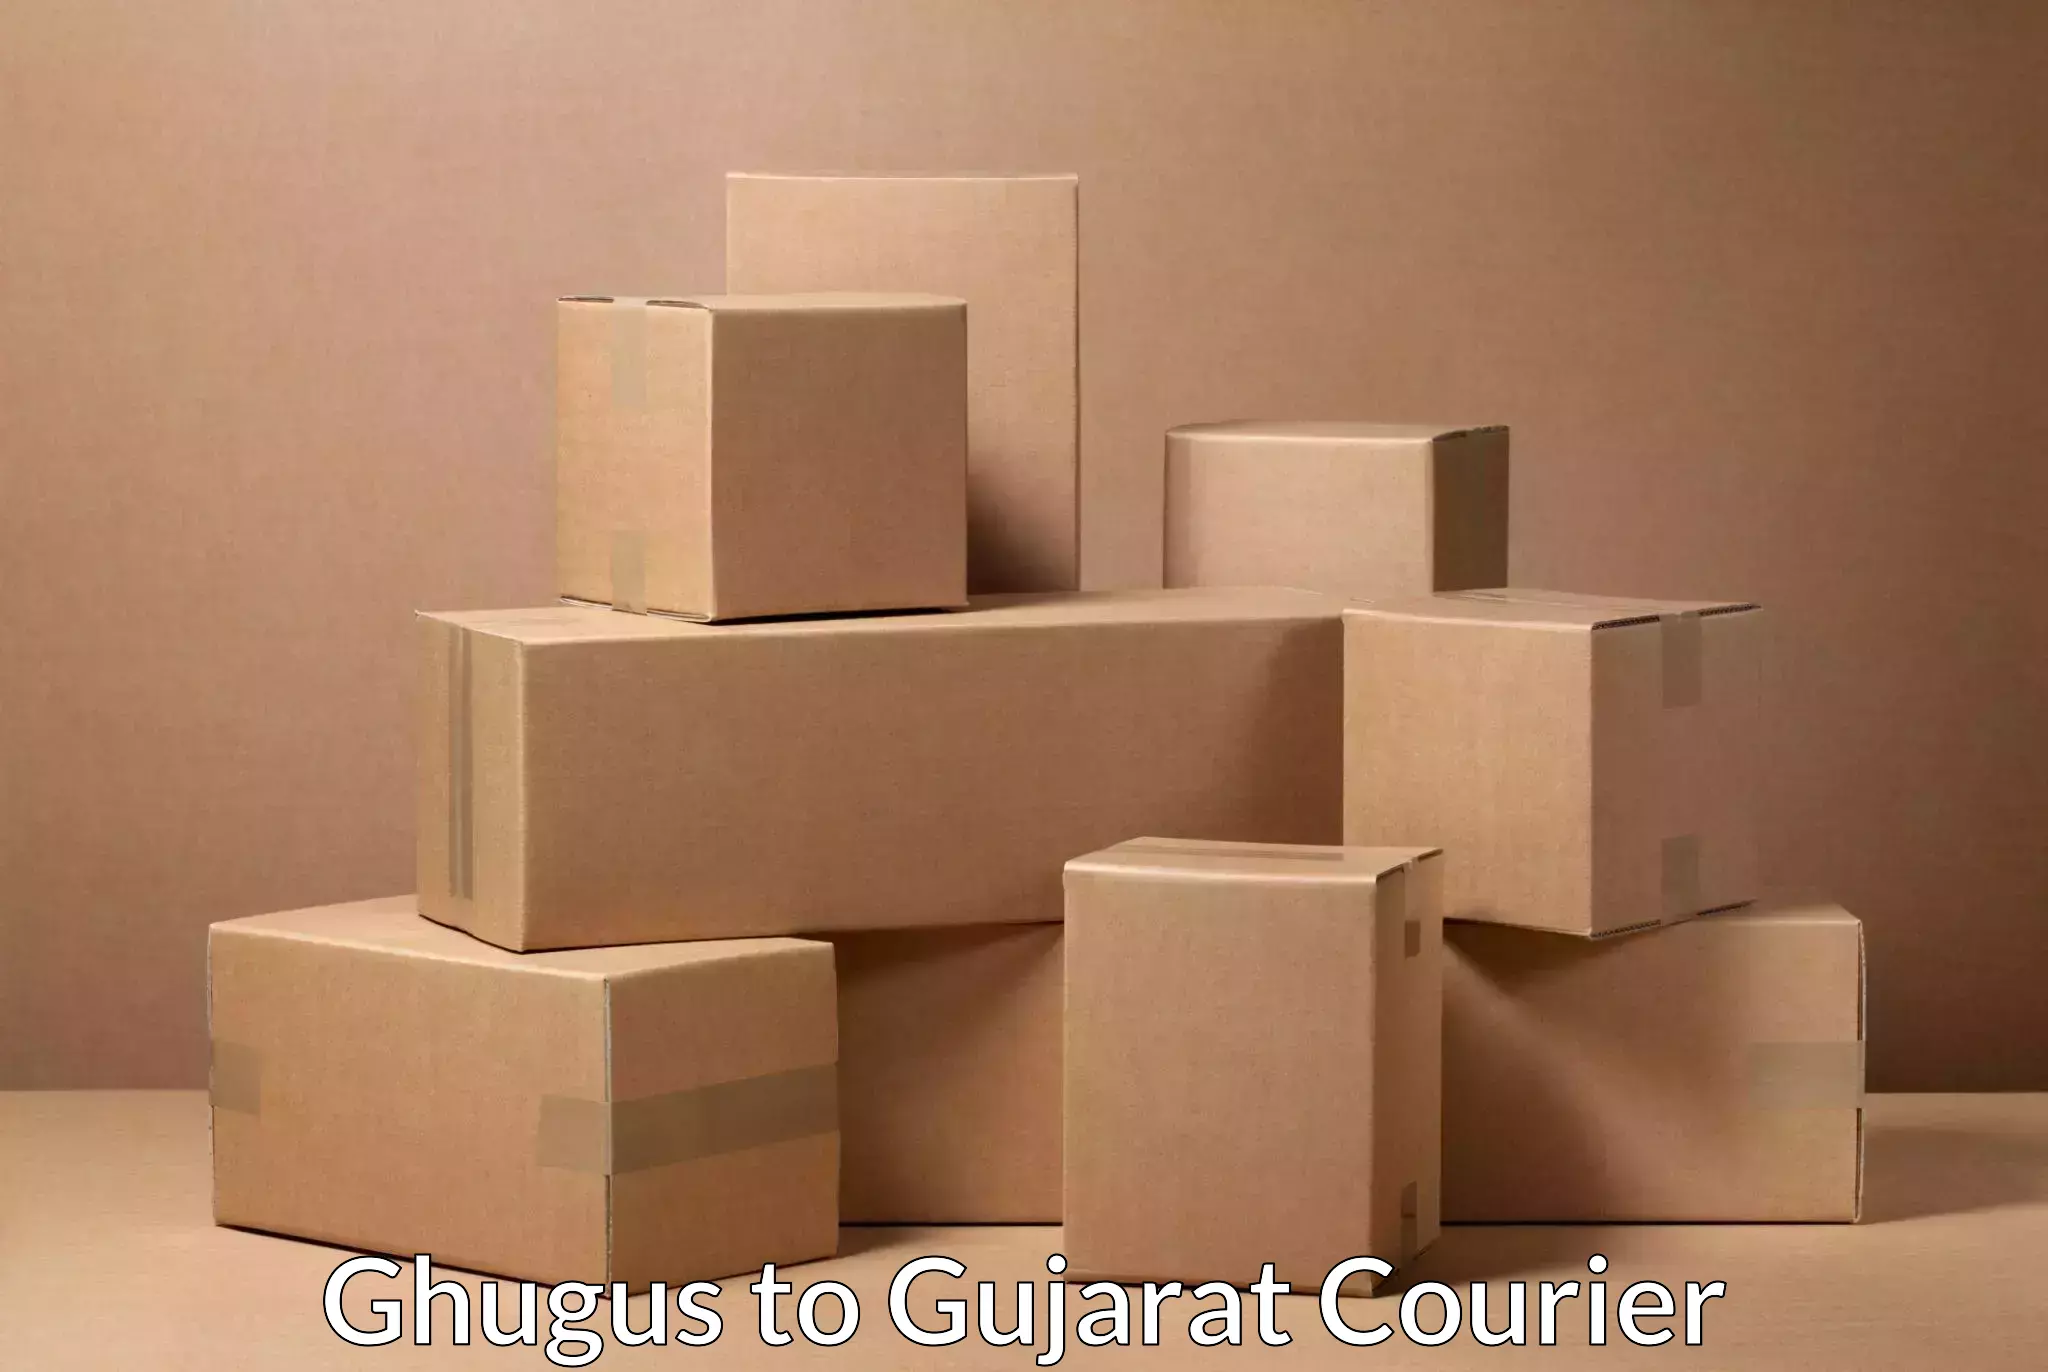 Online shipping calculator Ghugus to Gujarat